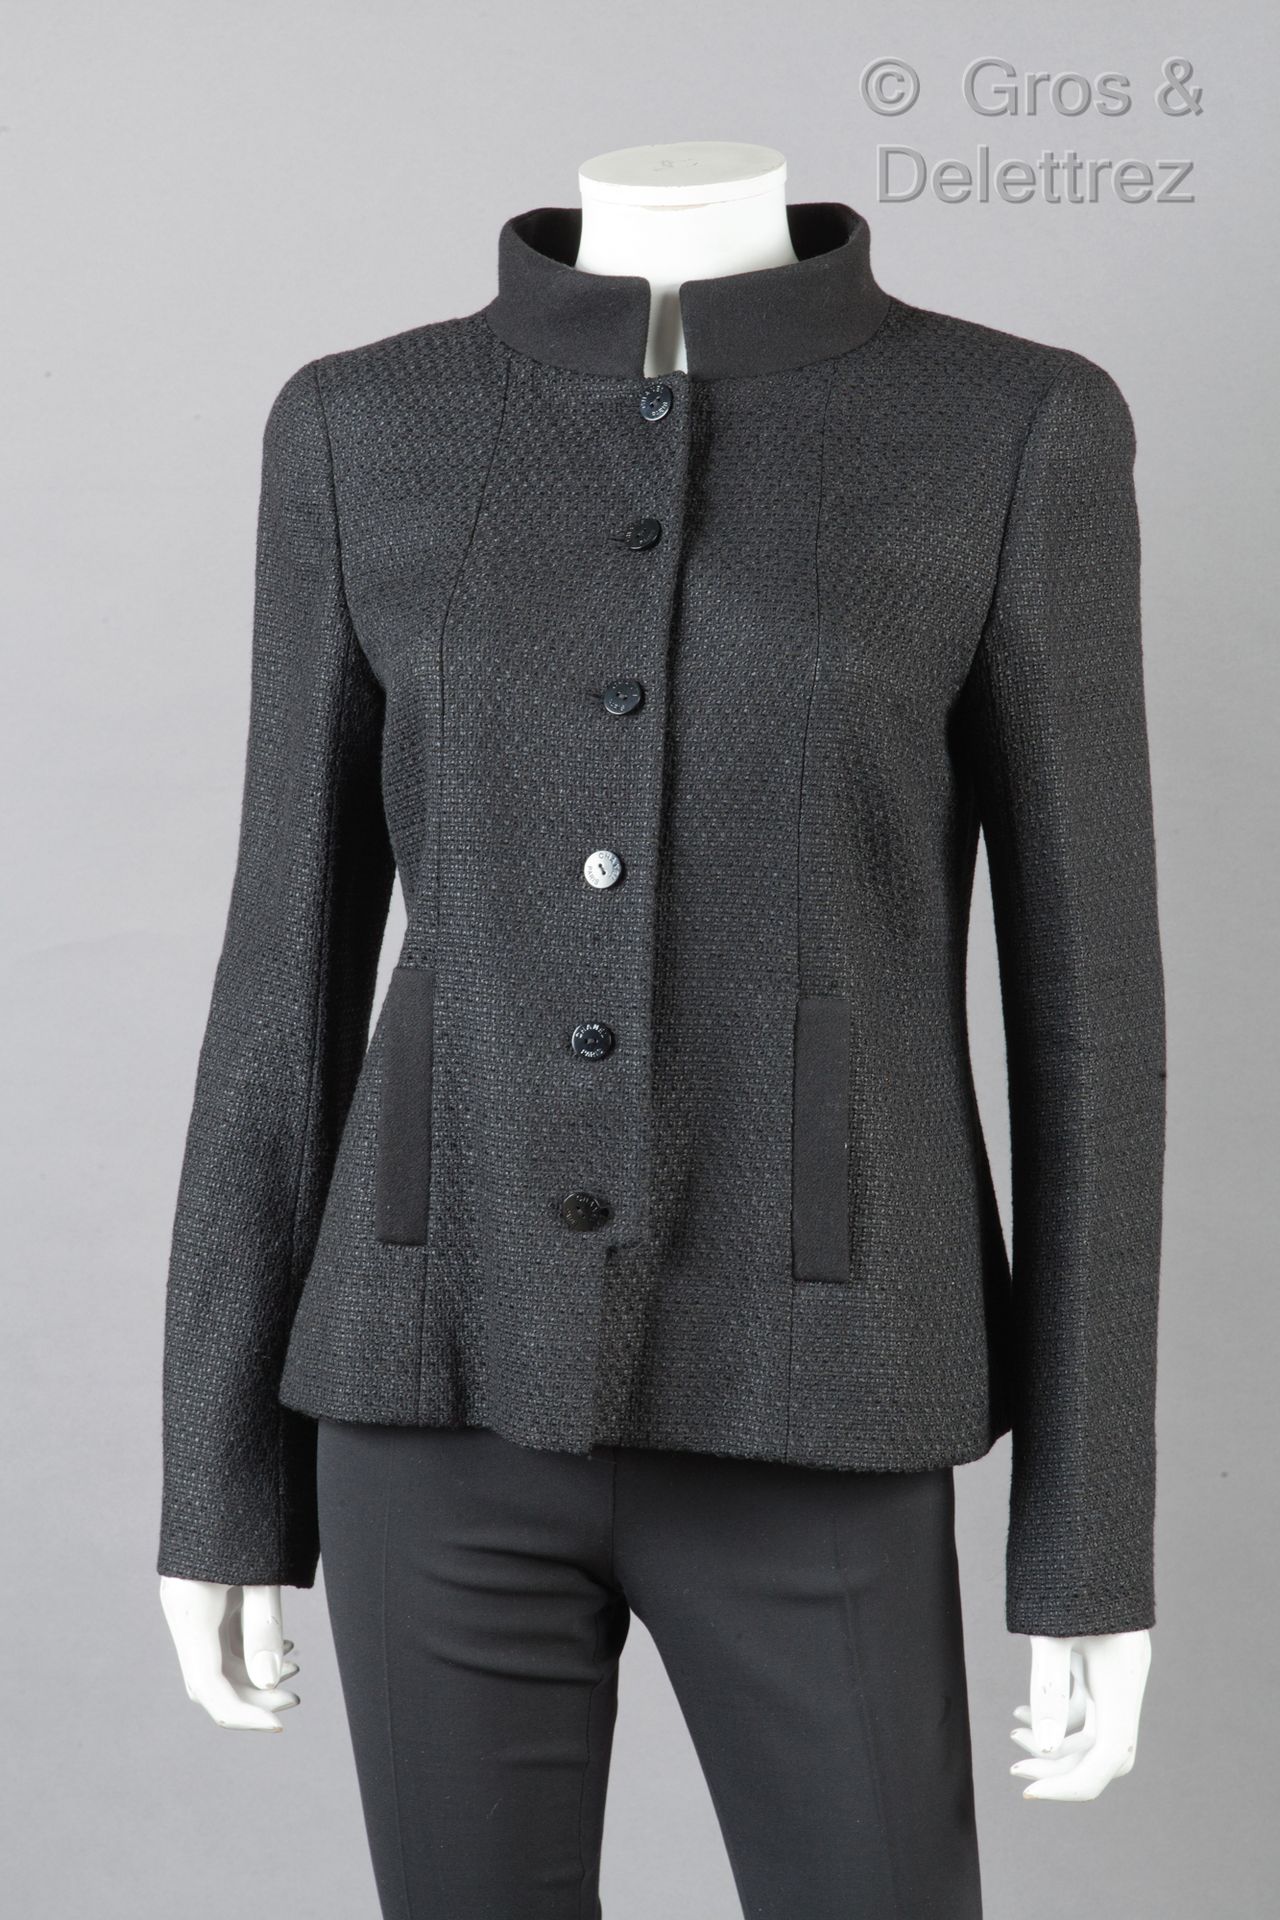 Null 卡尔-拉格斐的香奈儿专卖店

约1998年

黑色斜纹软呢外套，小毛领，单排扣，两个垂直口袋，长袖，底部有小镂空。黑色标签，白色图案。